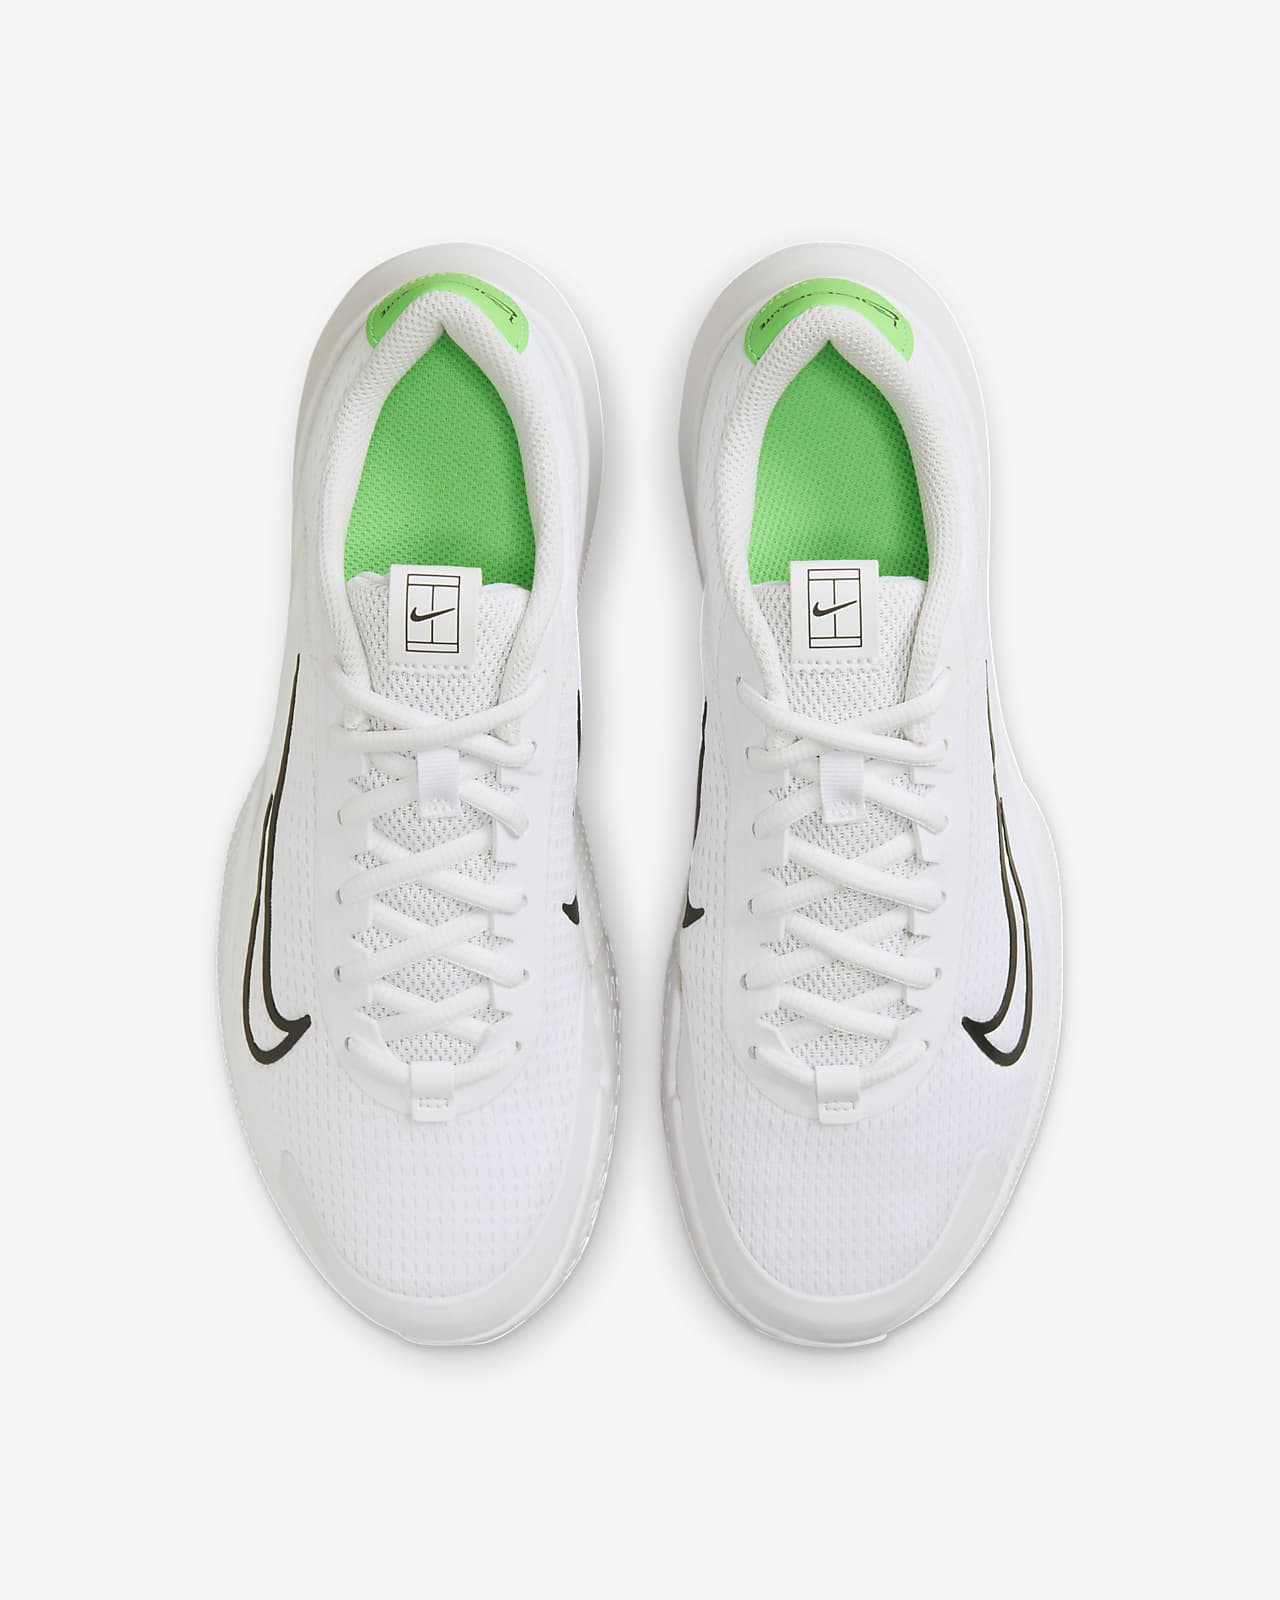 Nike Vapor Lite 2 Women's Tennis Shoe (White/Metalic Silver) 